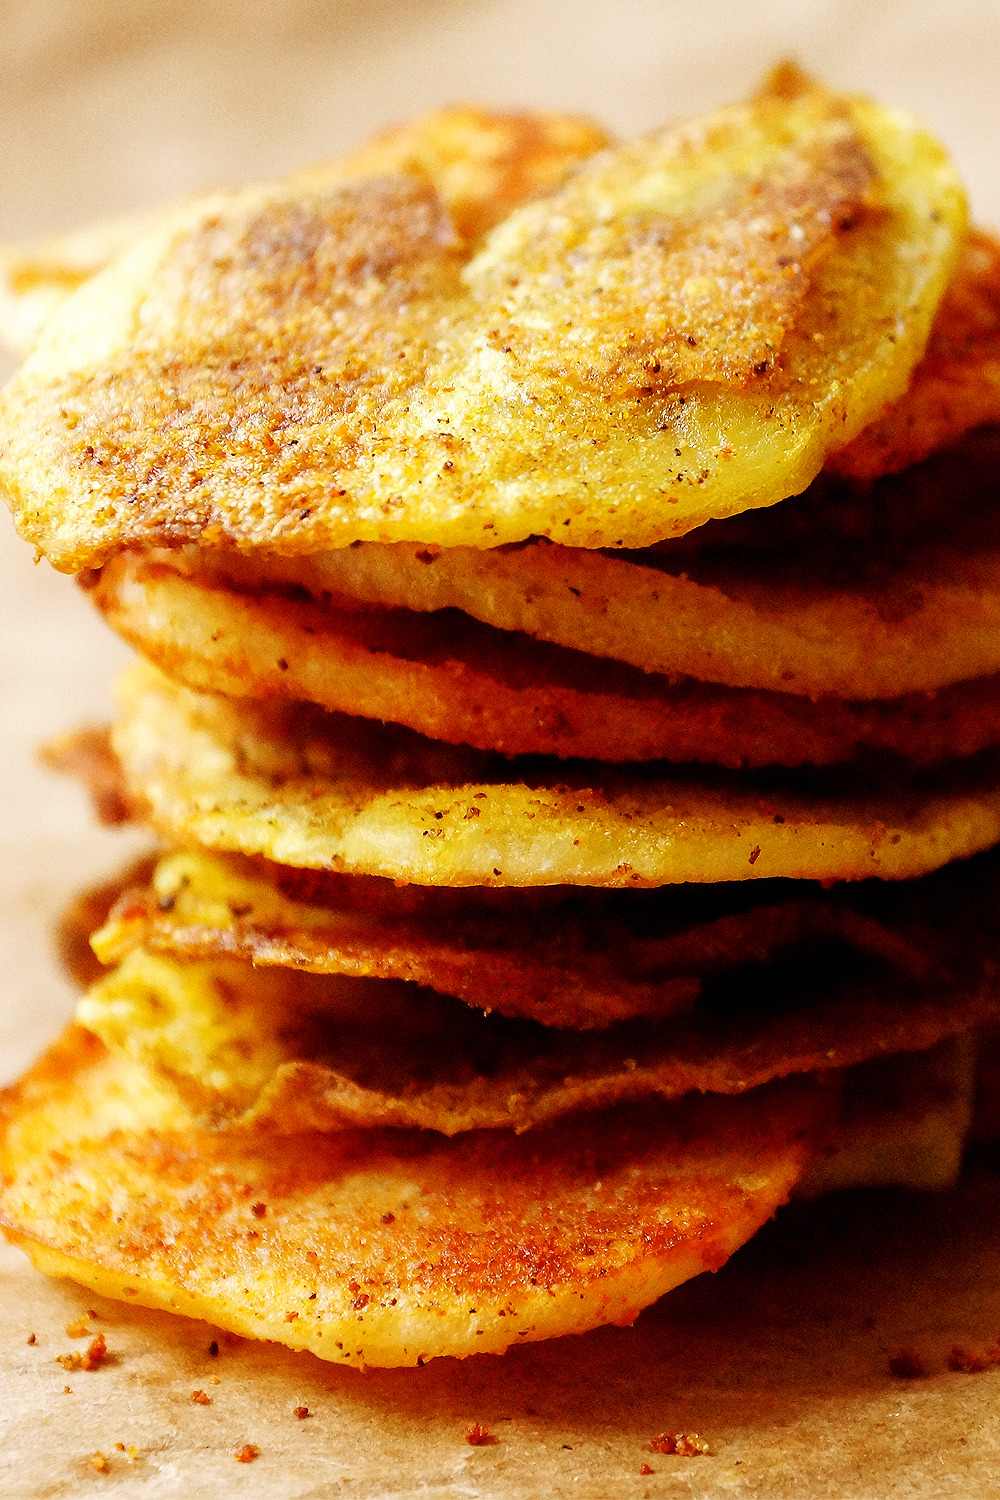 (via Oven Baked Potato Chips Divine Healthy Food)